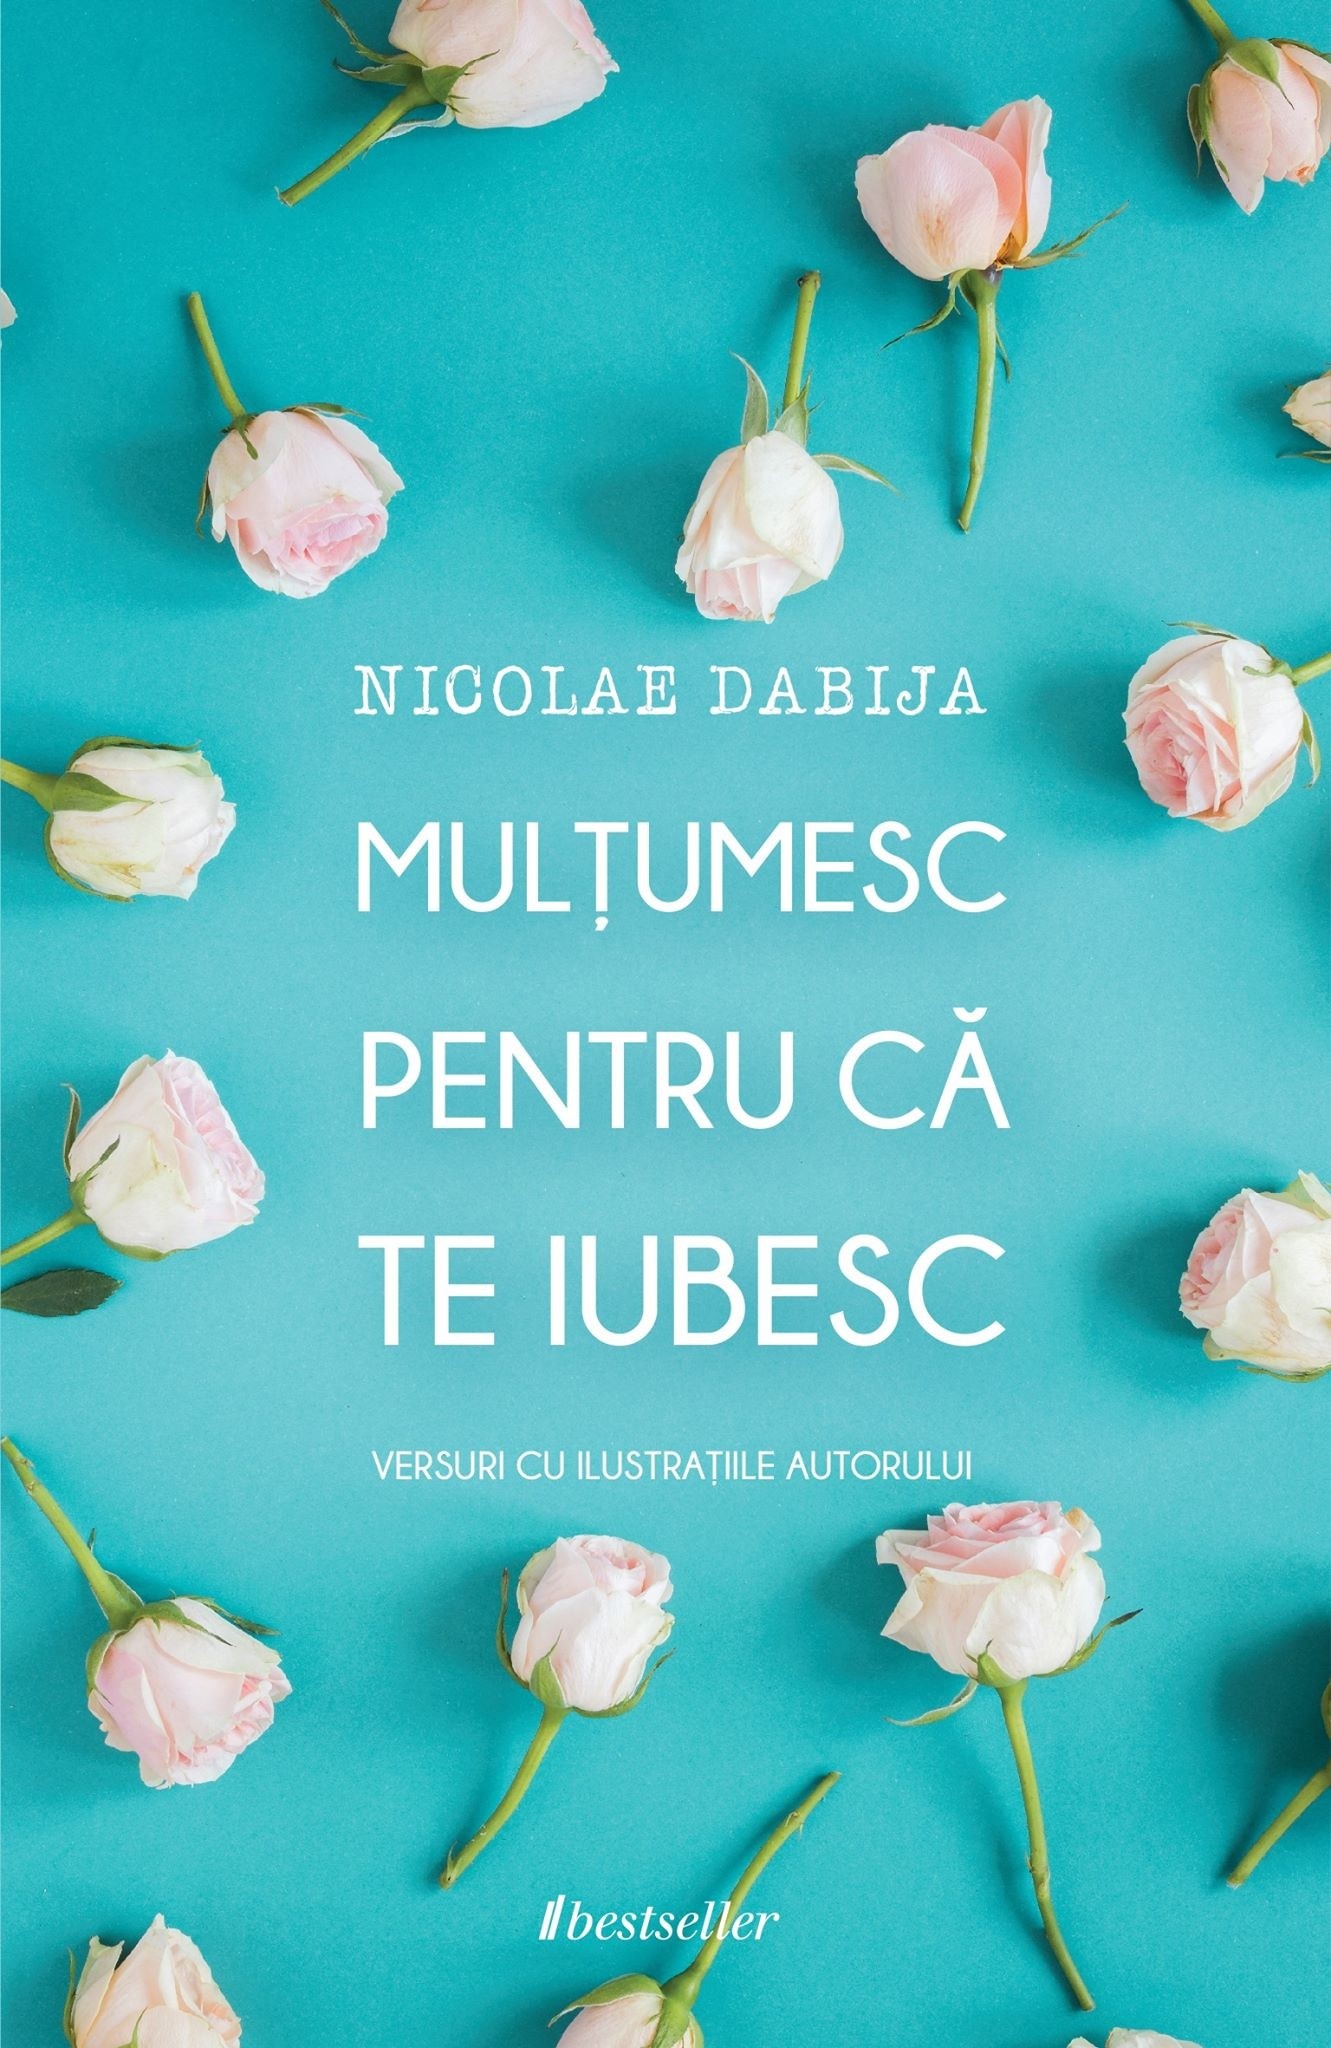 Multumesc pentru ca te iubesc | Nicolae Dabija Bestseller poza bestsellers.ro